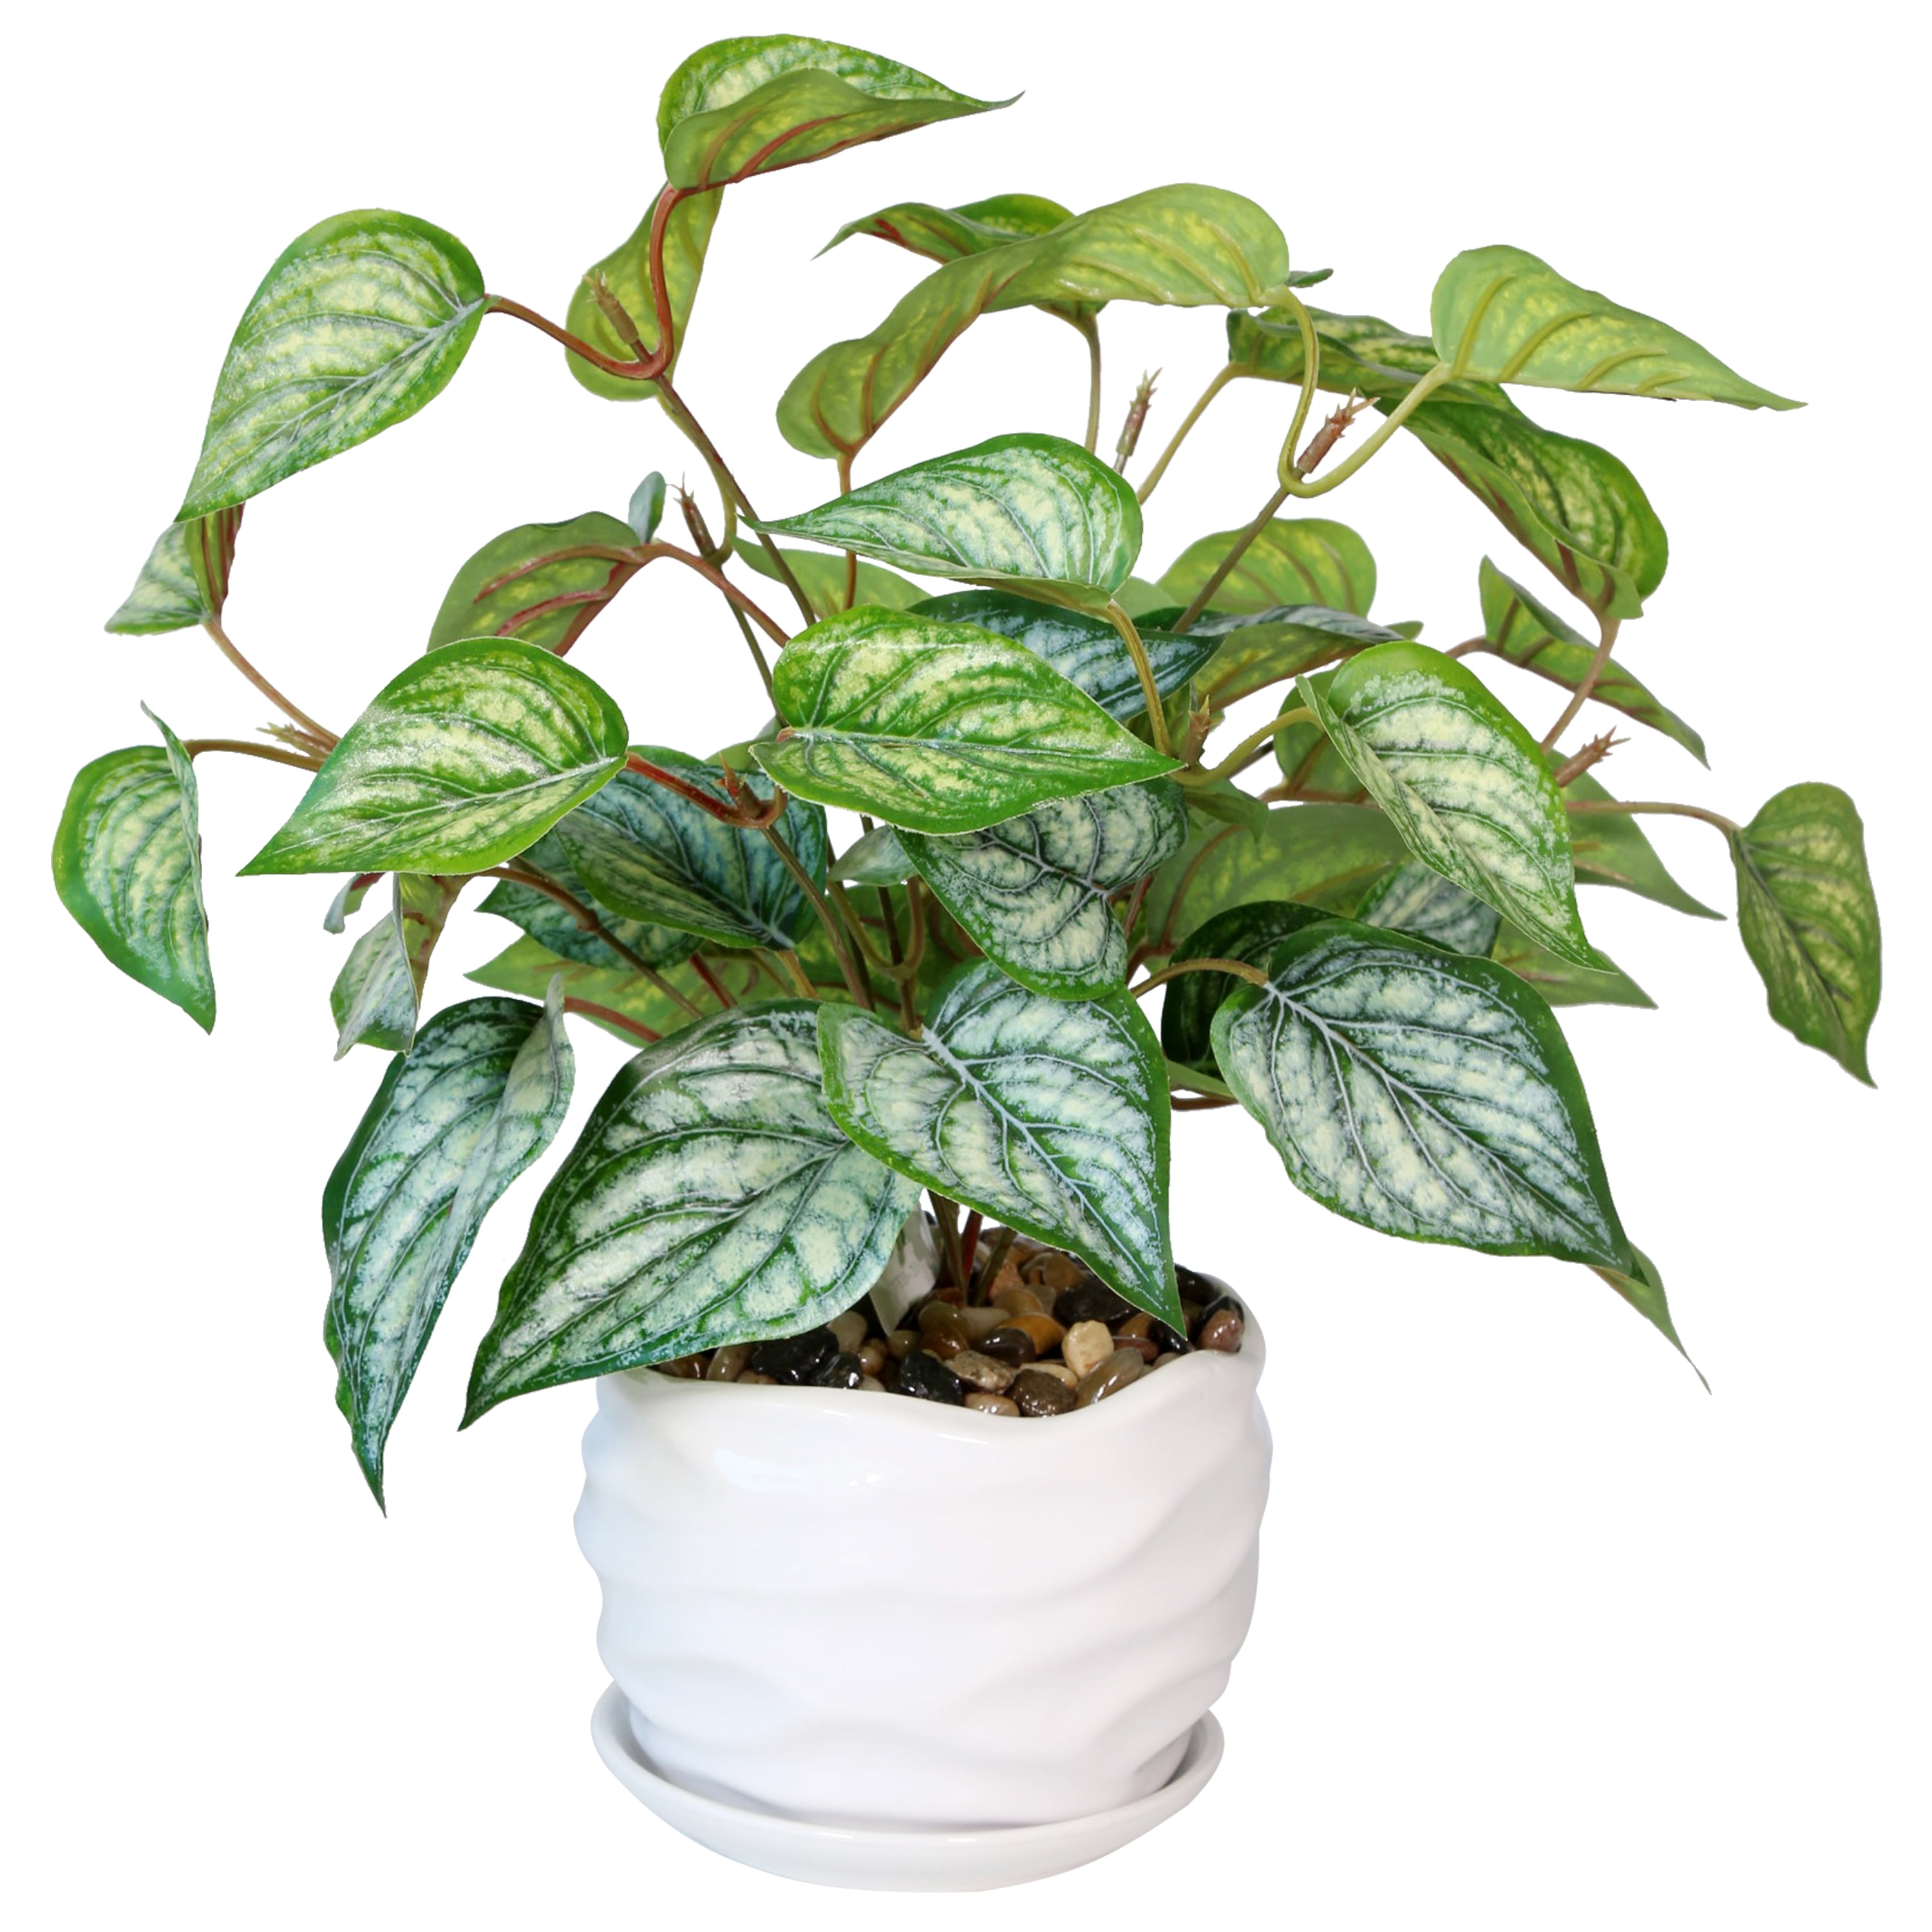 Mainstays 13.4" Artificial Argyreia Leaf Plant With Ceramic Pot in White